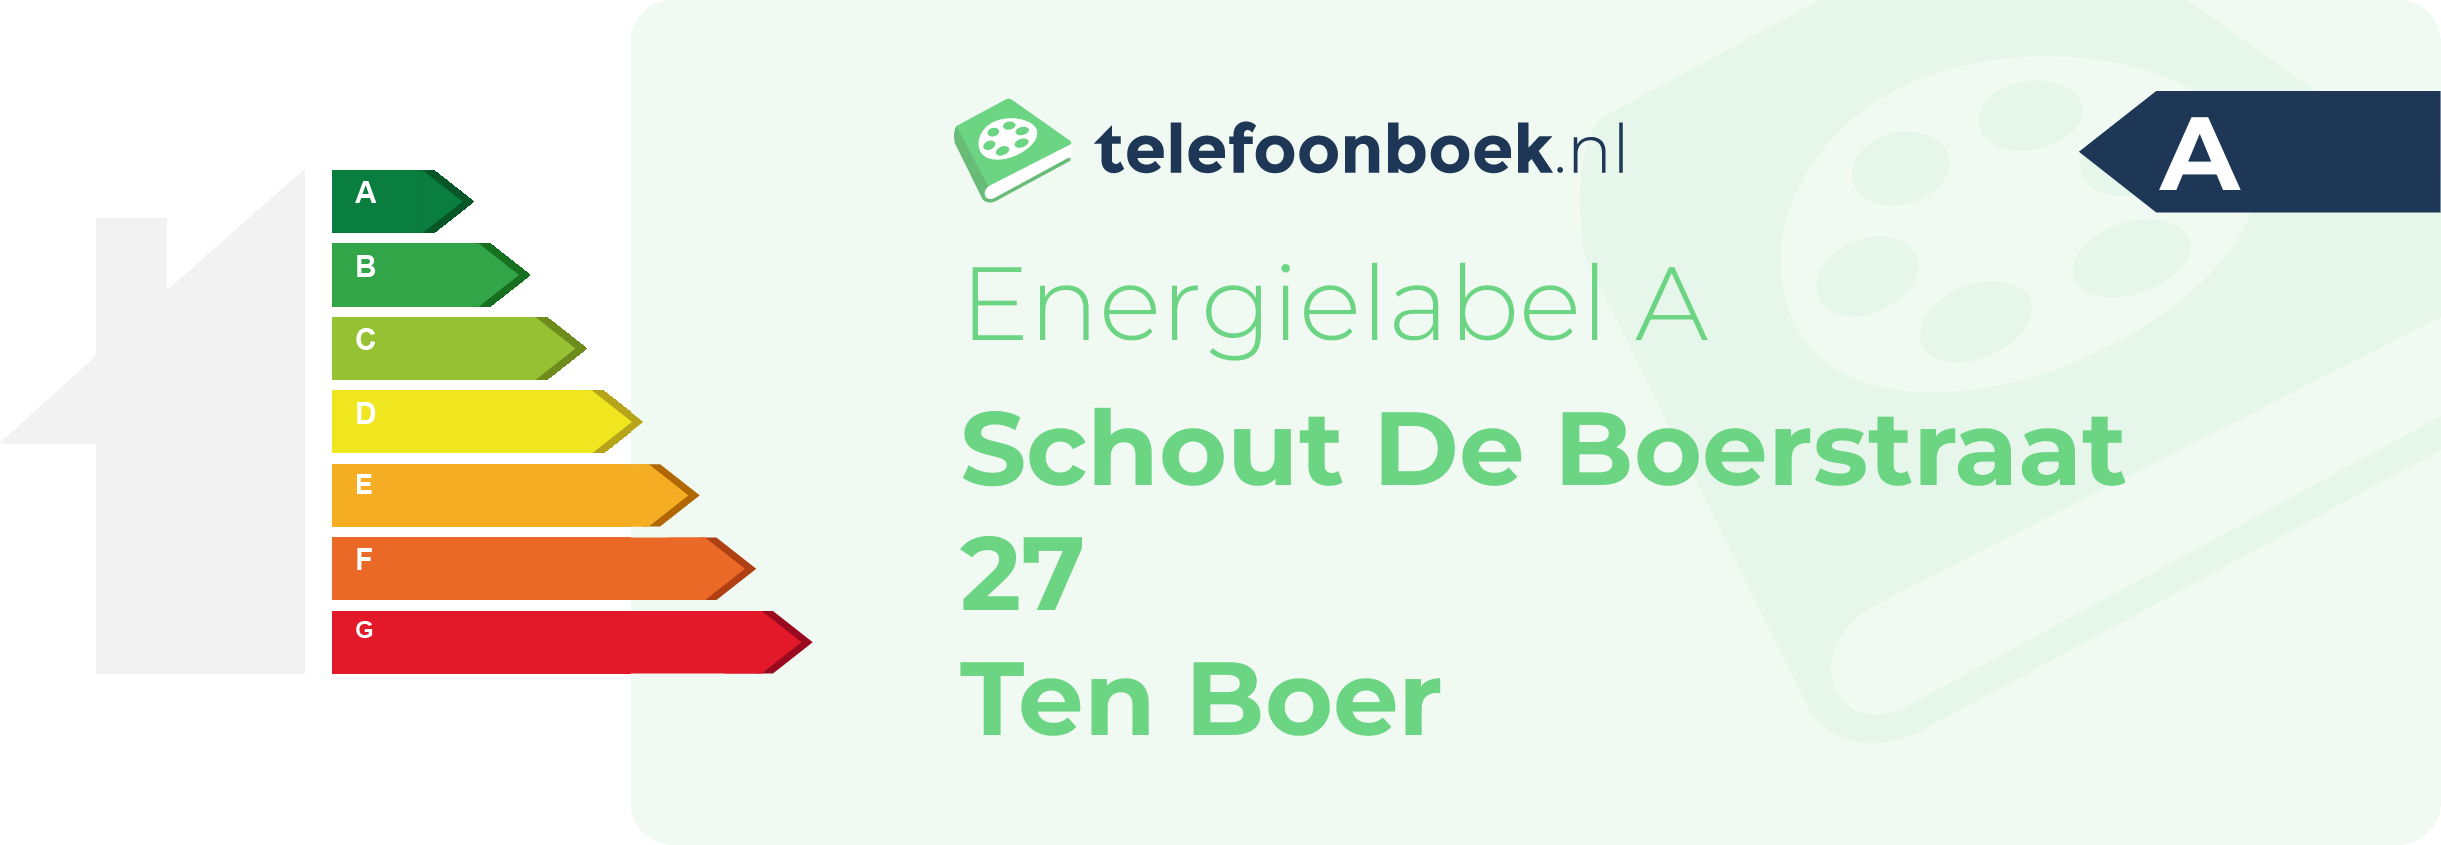 Energielabel Schout De Boerstraat 27 Ten Boer